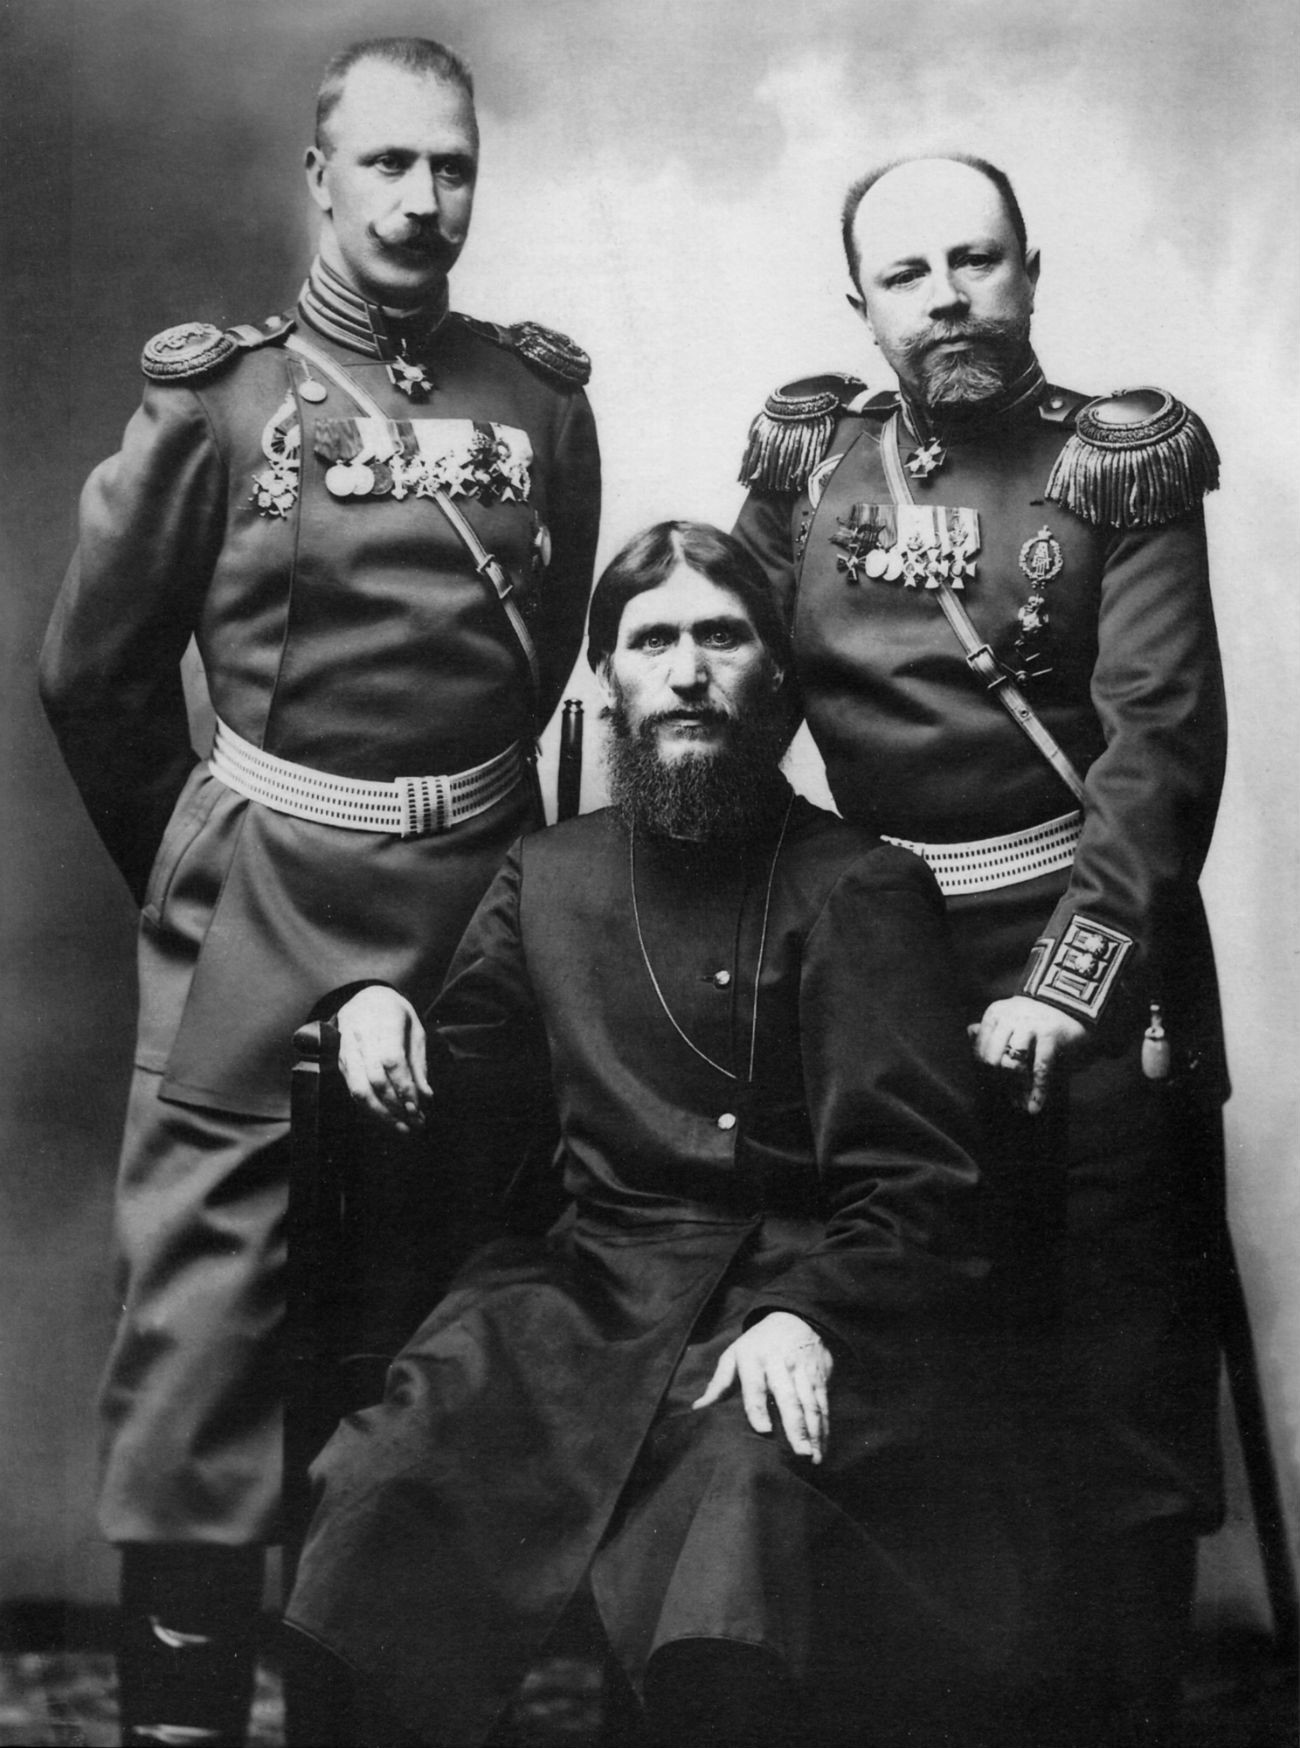 Dari kiri ke kanan: Kolonel Loman, Grigory Rasputin, Jenderal Putyatin.